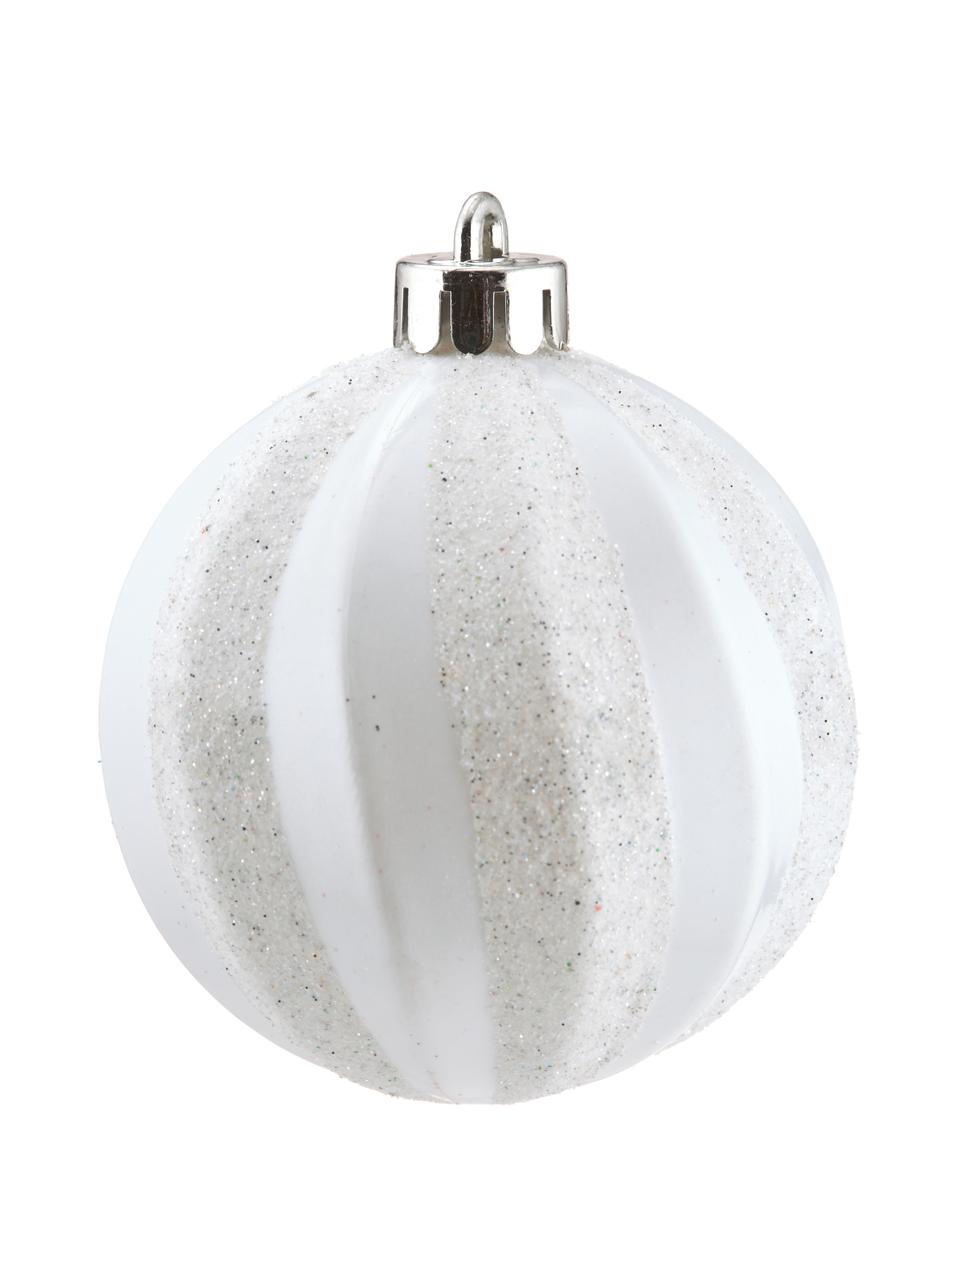 Sada vánočních ozdob Nip, Ø 7 cm, 60 dílů, Bílá, stříbrná, tyrkysová, Ø 7 cm